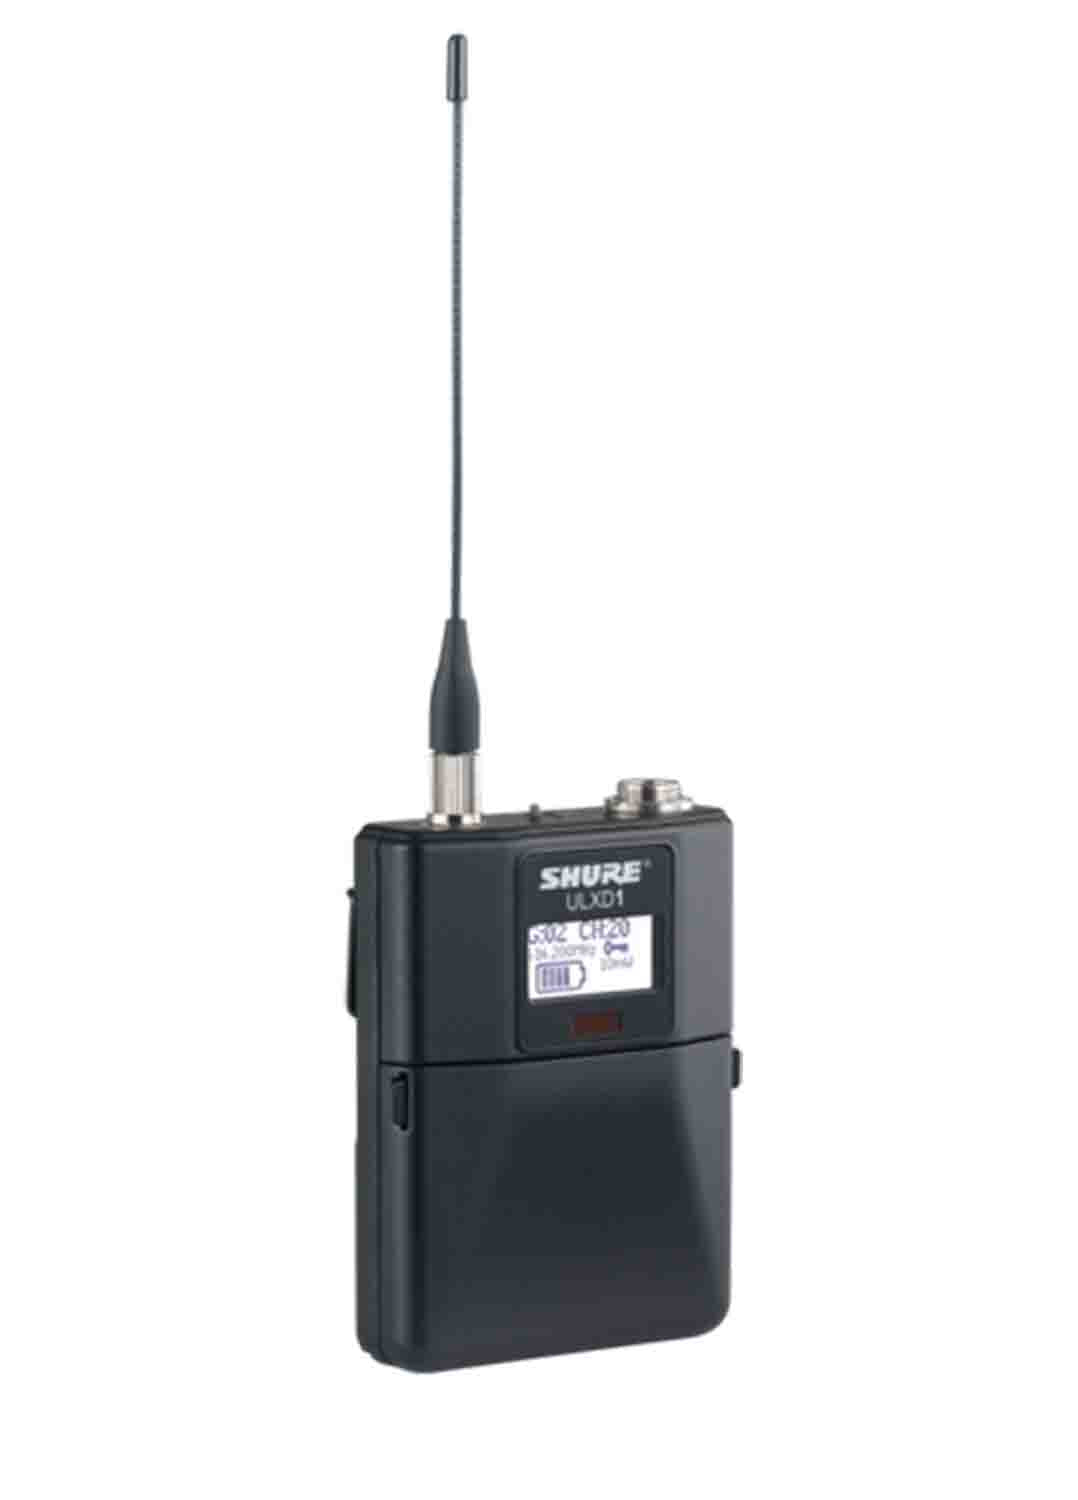 Shure ULXD1-G50 Digital Bodypack Transmitter - G50 (470-534 MHz) - Hollywood DJ